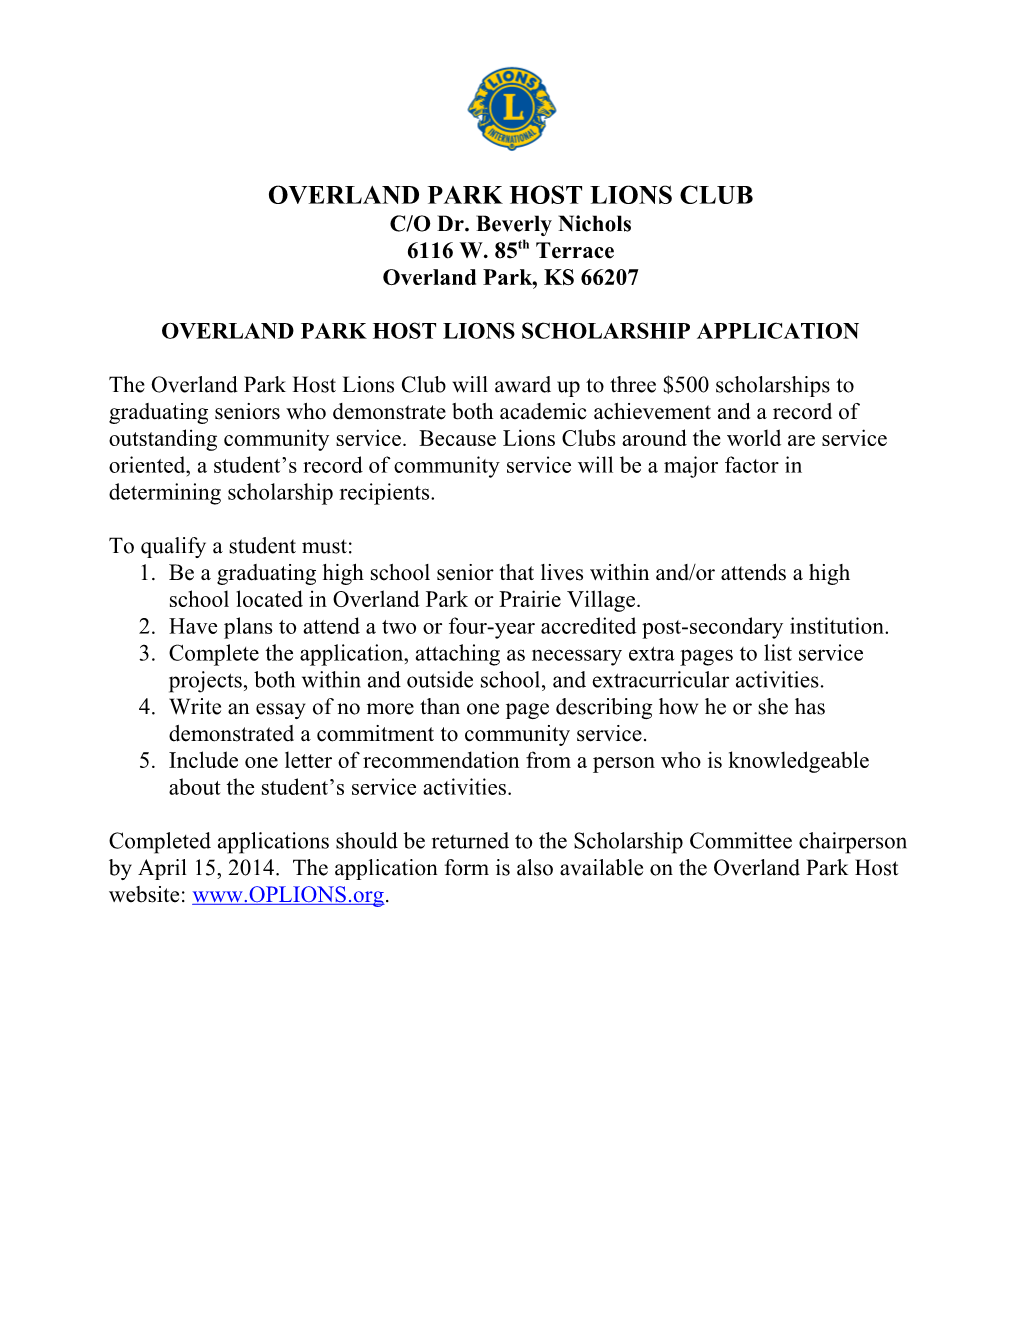 Overland Park Host Lions Club Scholarship Application 2009